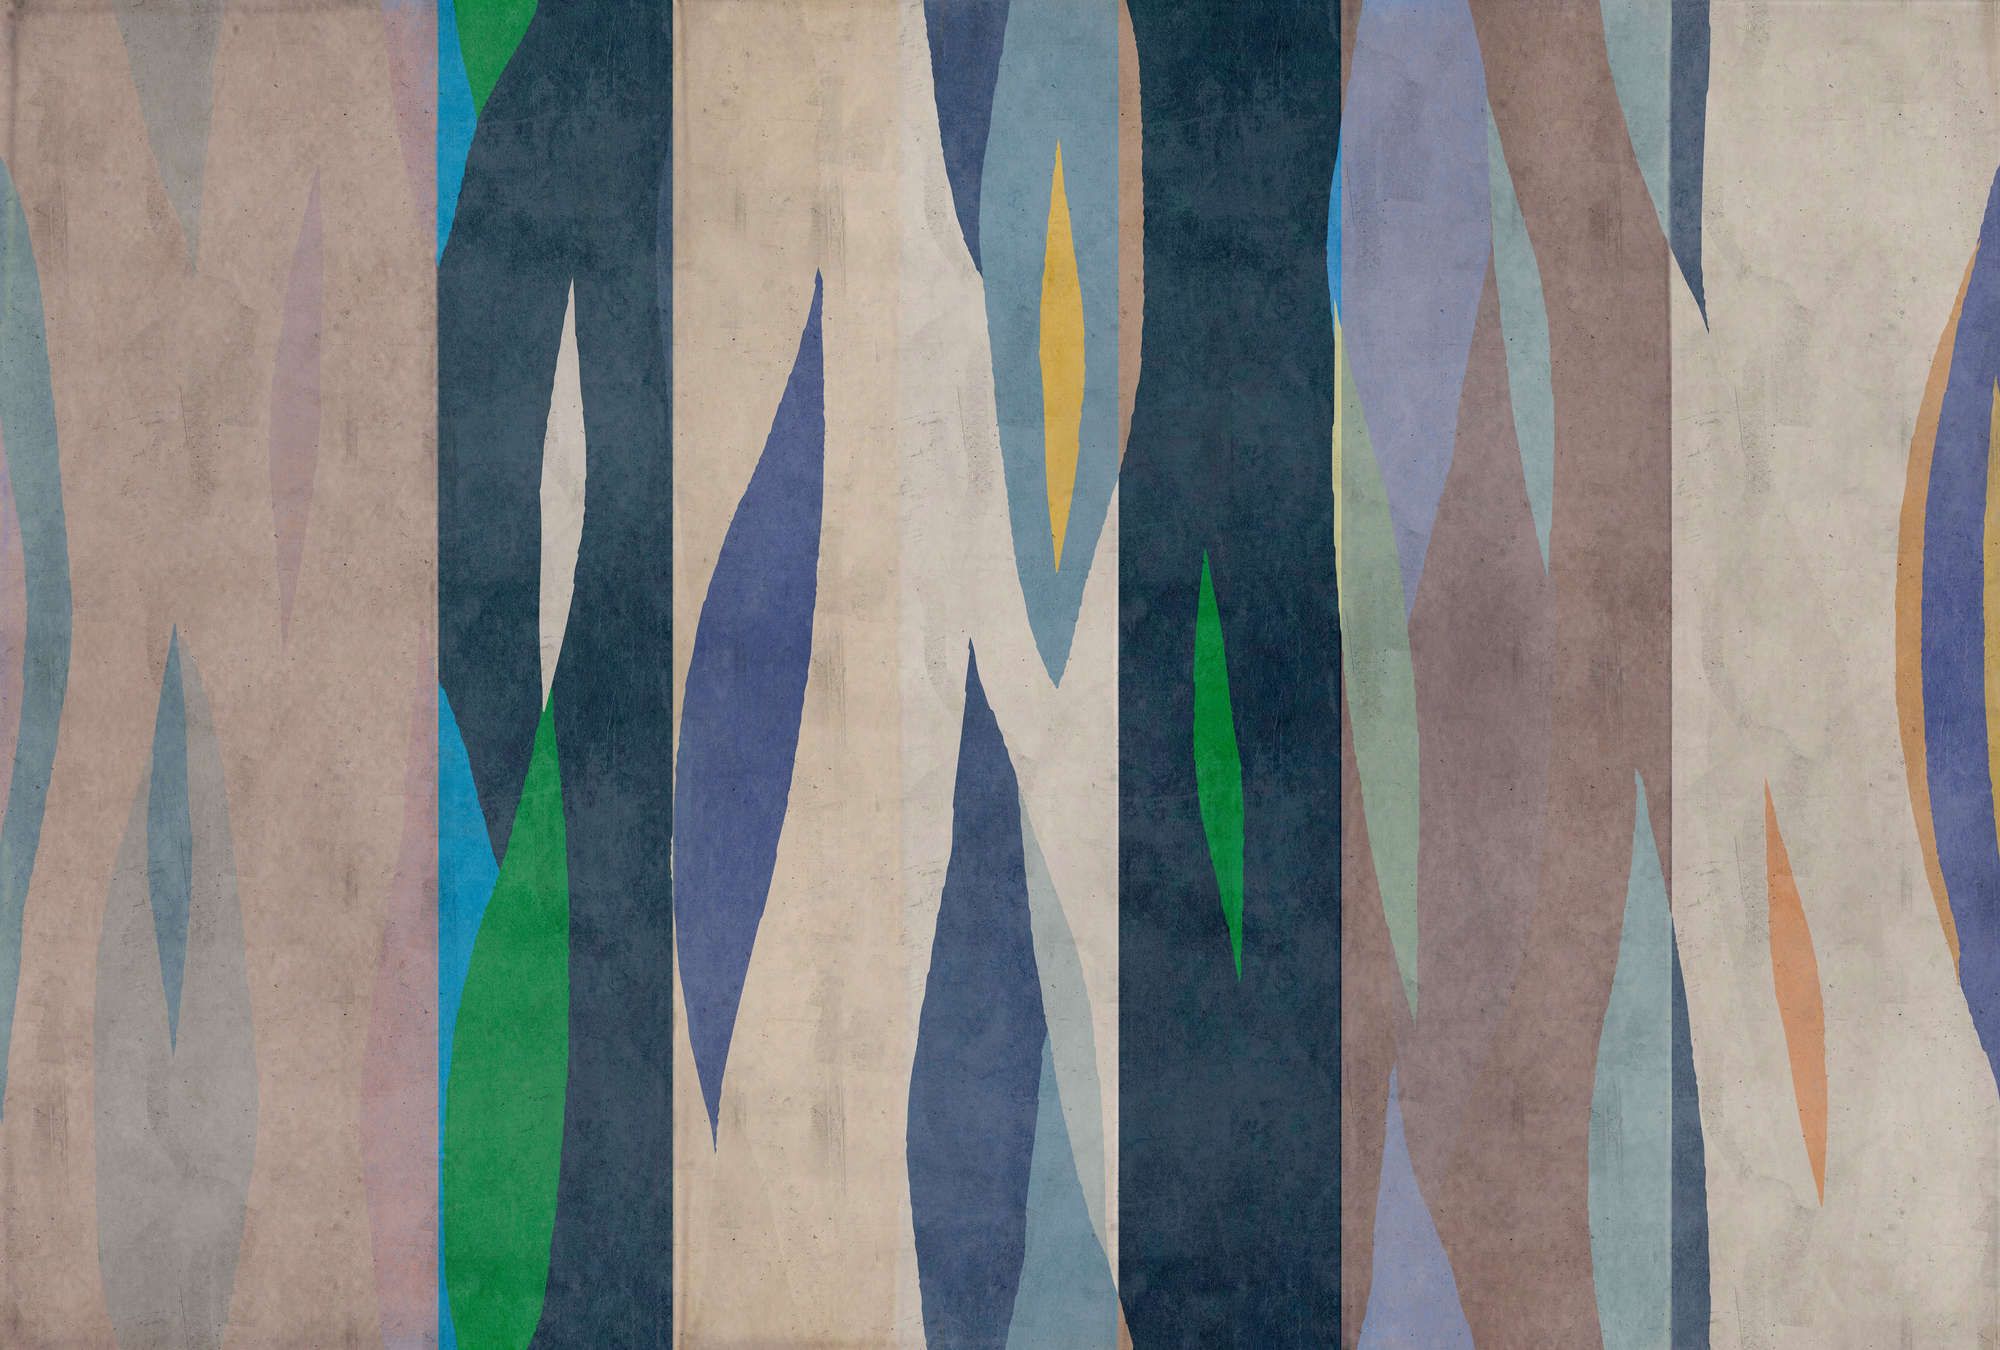             Photo wallpaper »vito« - Colourful tiger pattern on concrete plaster look - Blue, Green | Matt, Smooth non-woven fabric
        